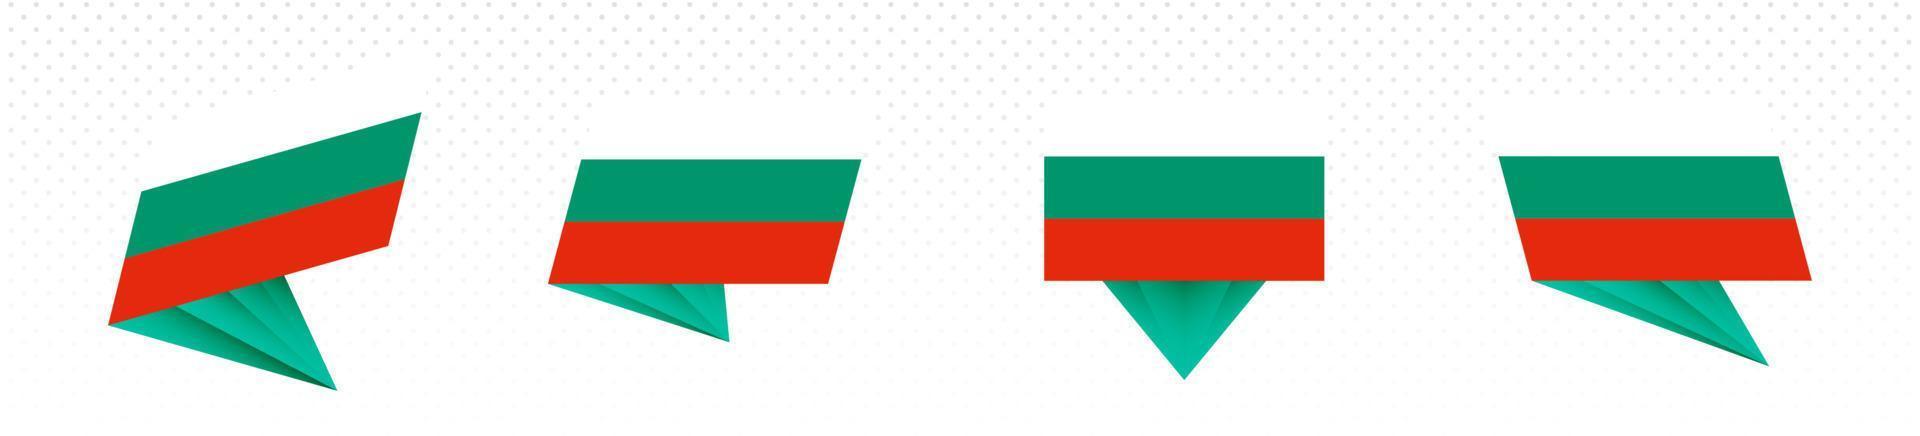 bandeira da bulgária em design abstrato moderno, conjunto de bandeiras. vetor